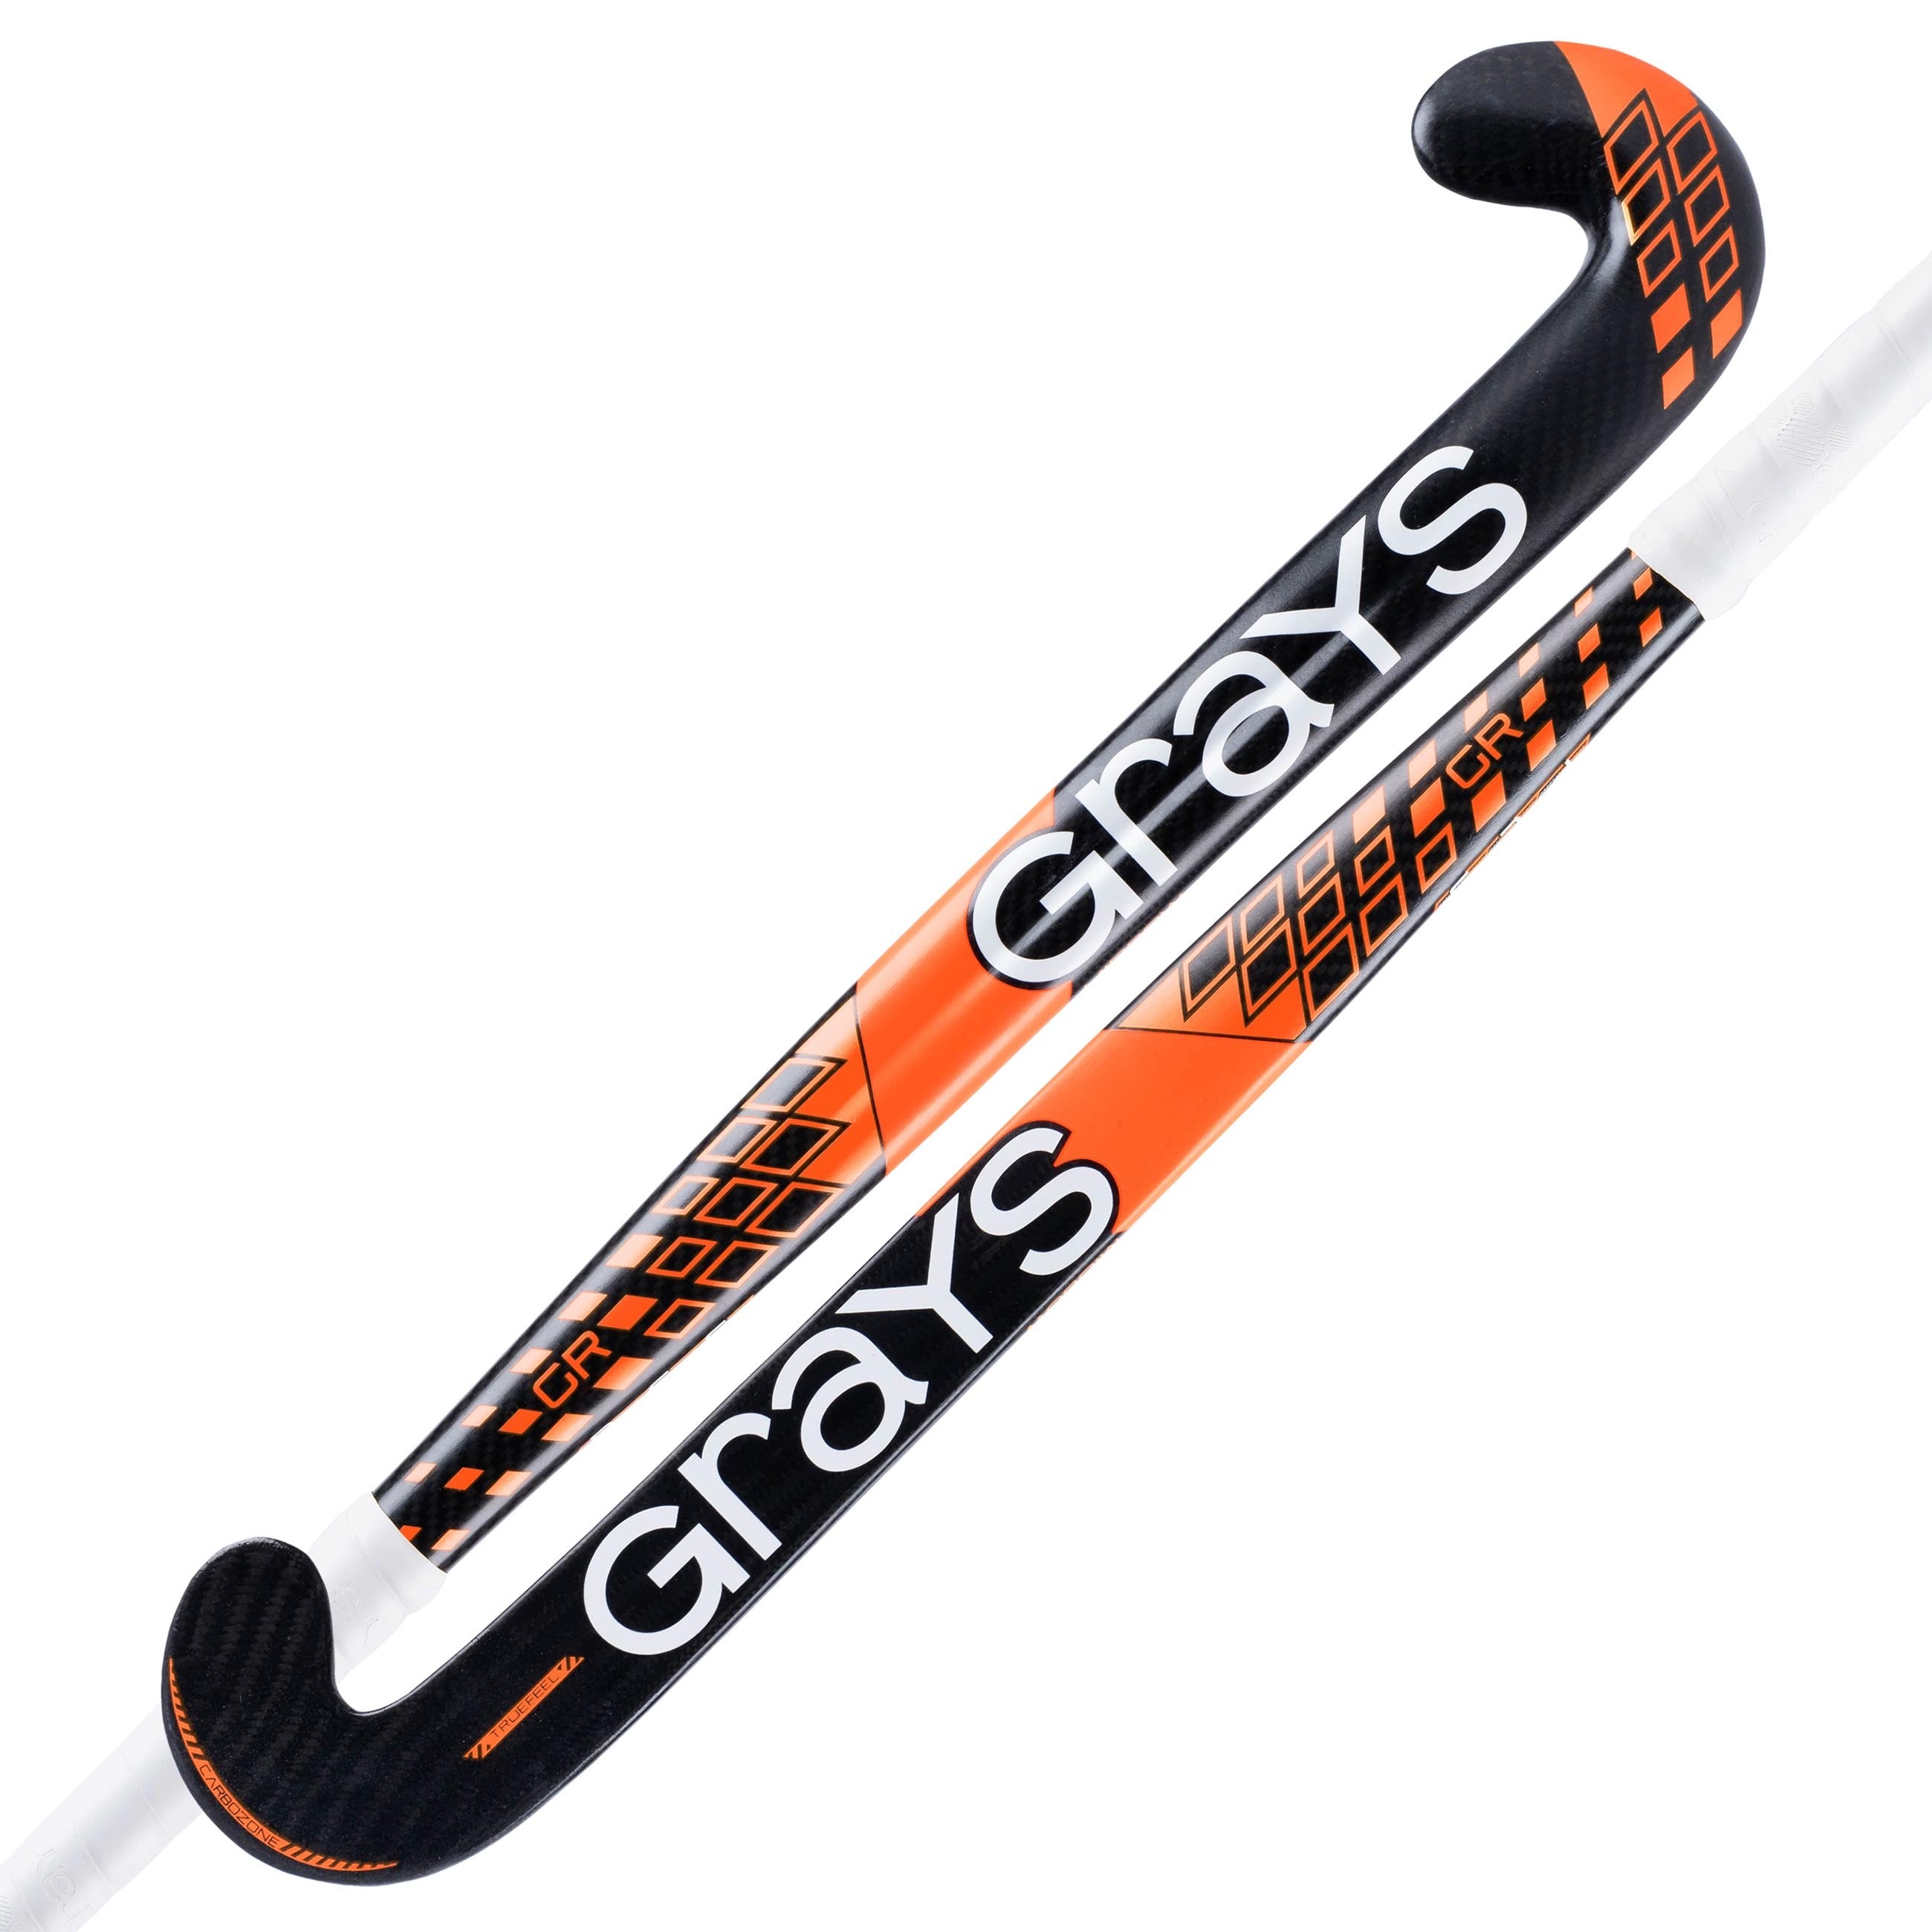 GR8000 Midbow Composite Hockey Stick